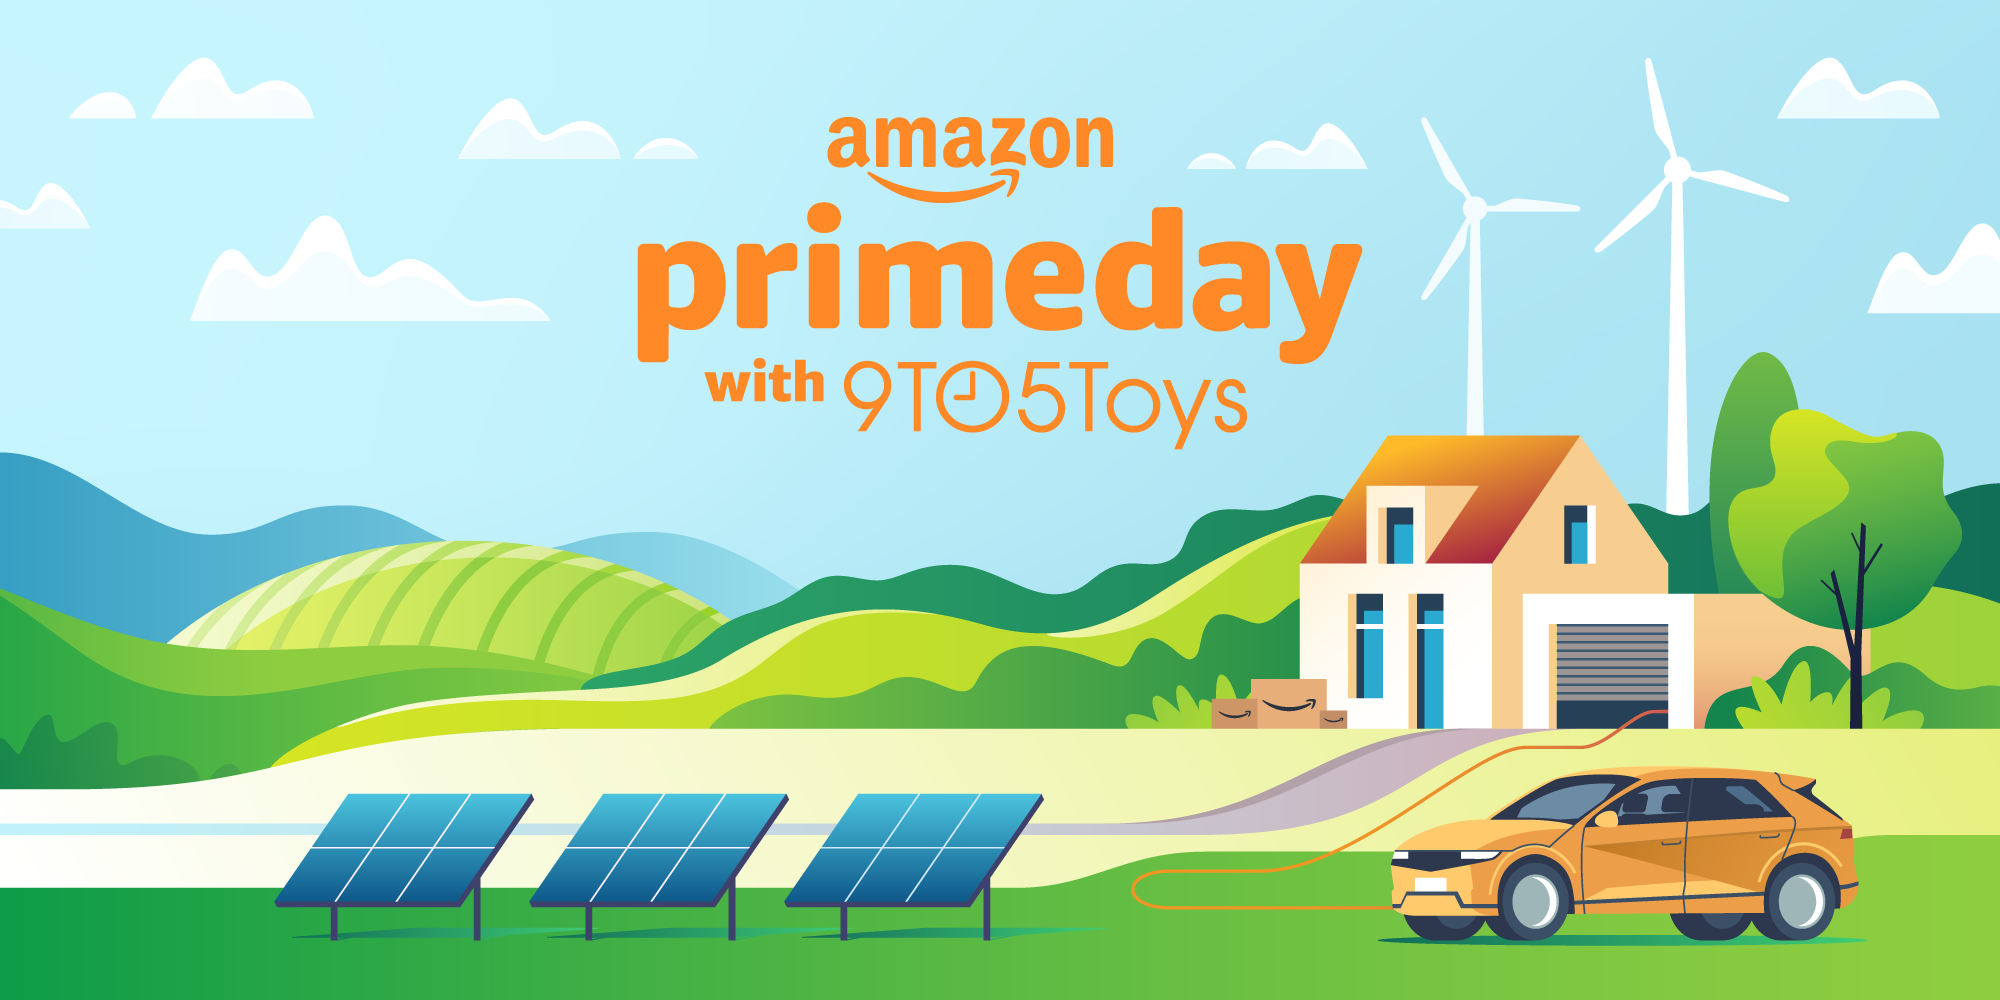 Amazon Prime Day Electrek Green Deals promo FI